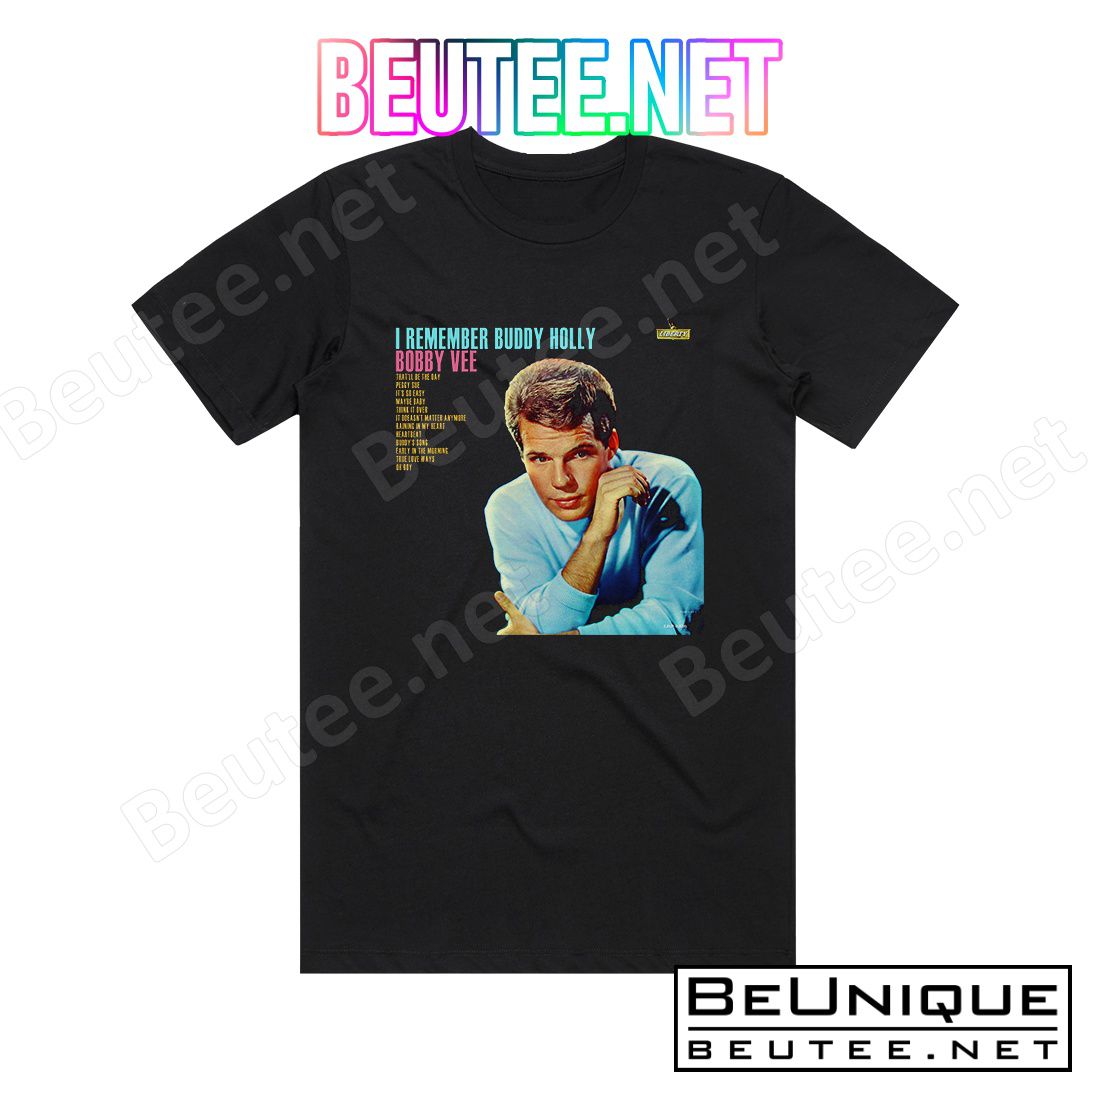 Bobby Vee I Remember Buddy Holly Album Cover T-Shirt